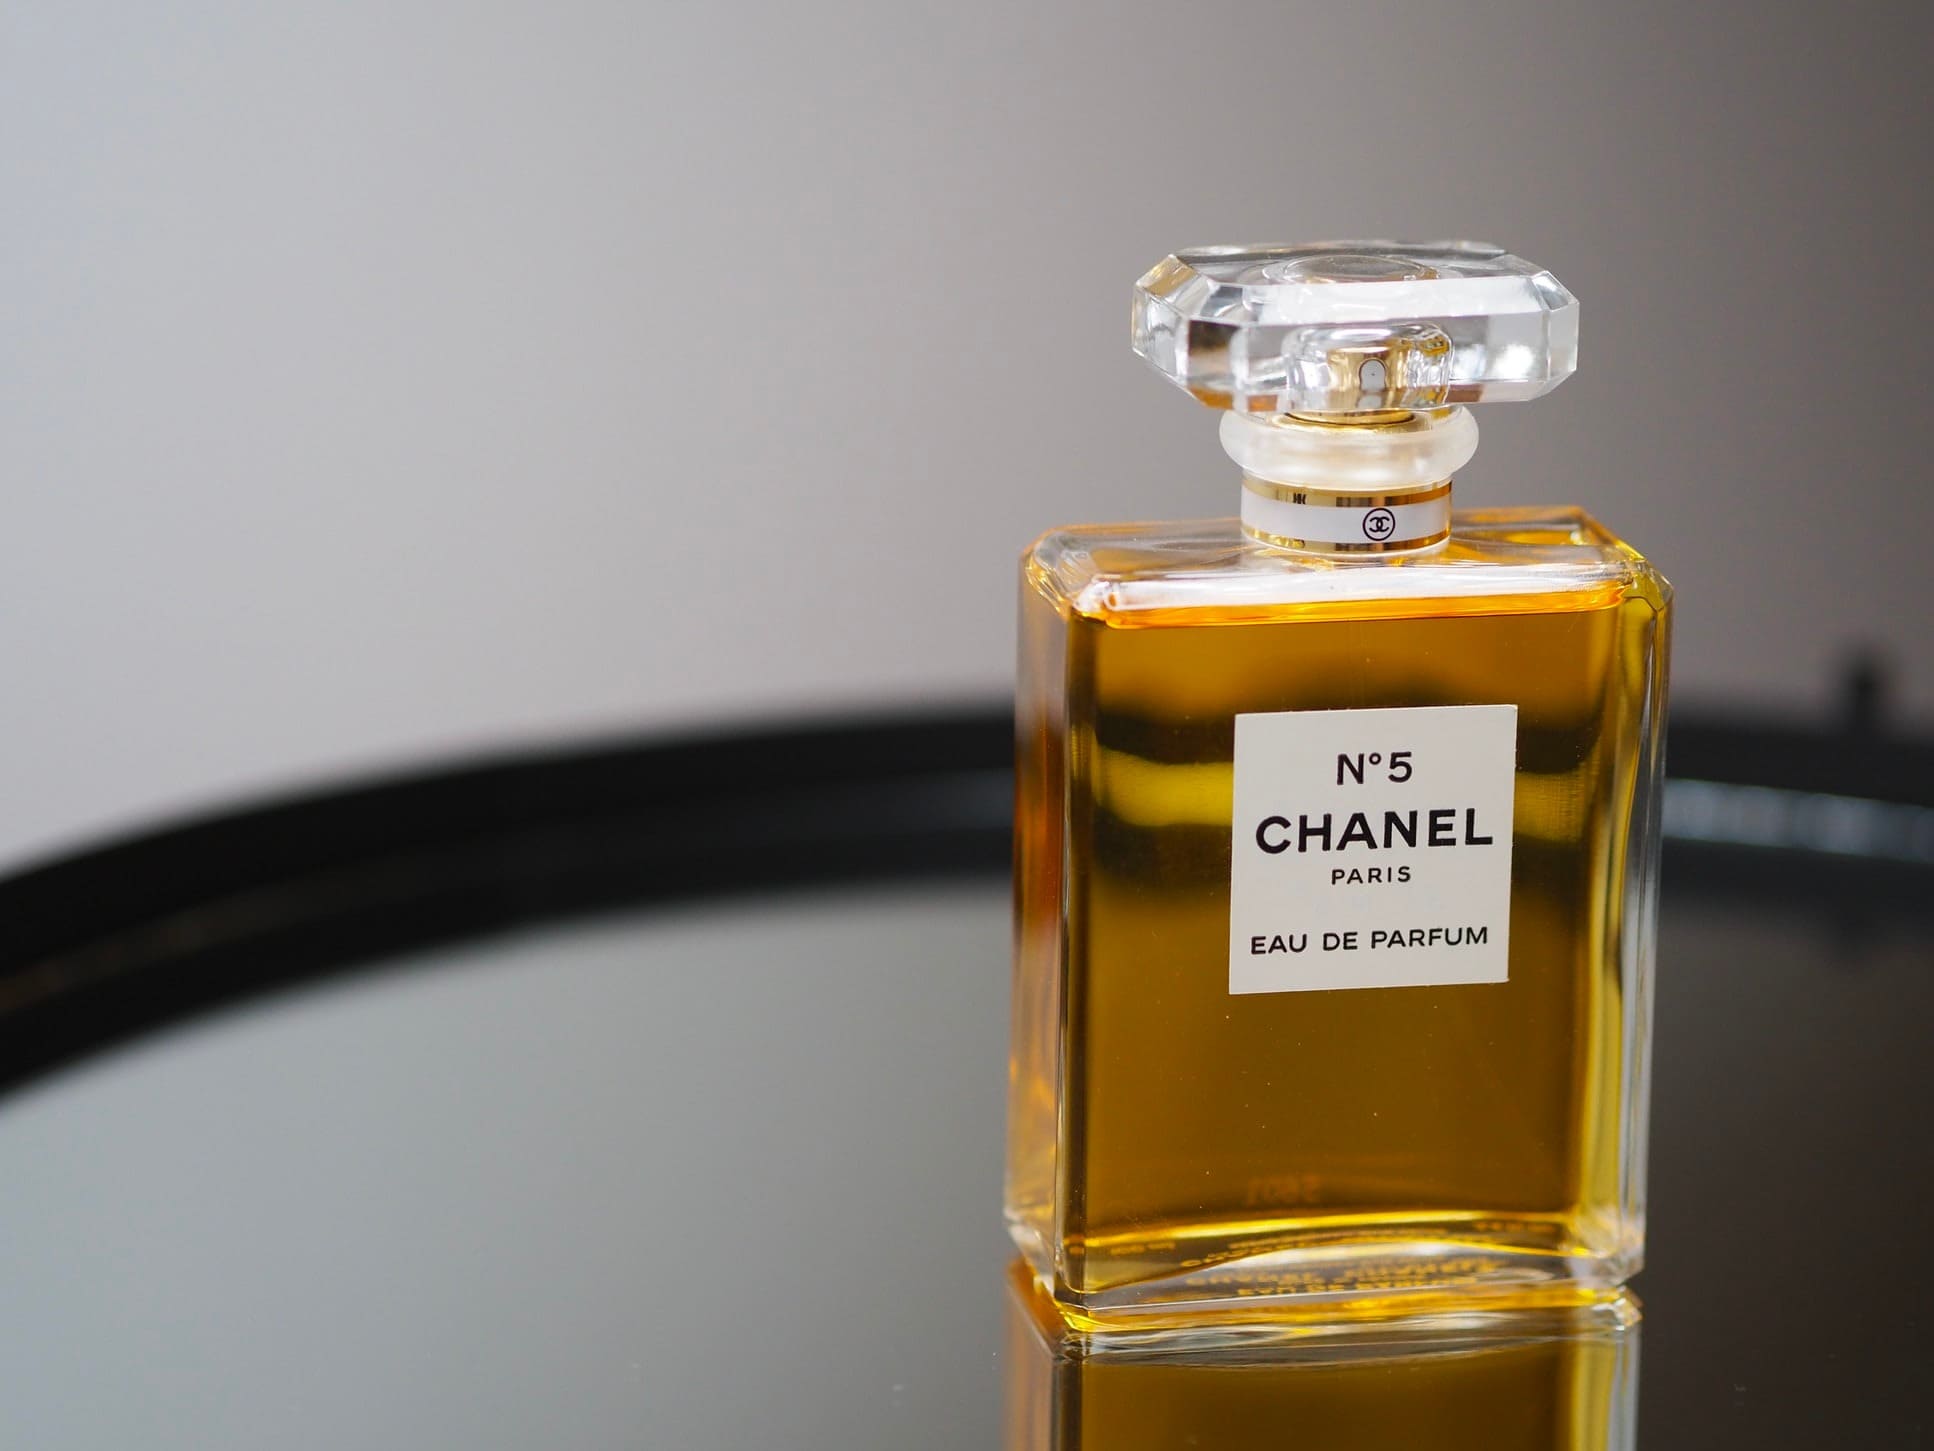 Chanel No 5 Eau de Parfum  Cactus Perfume  Cosmetics